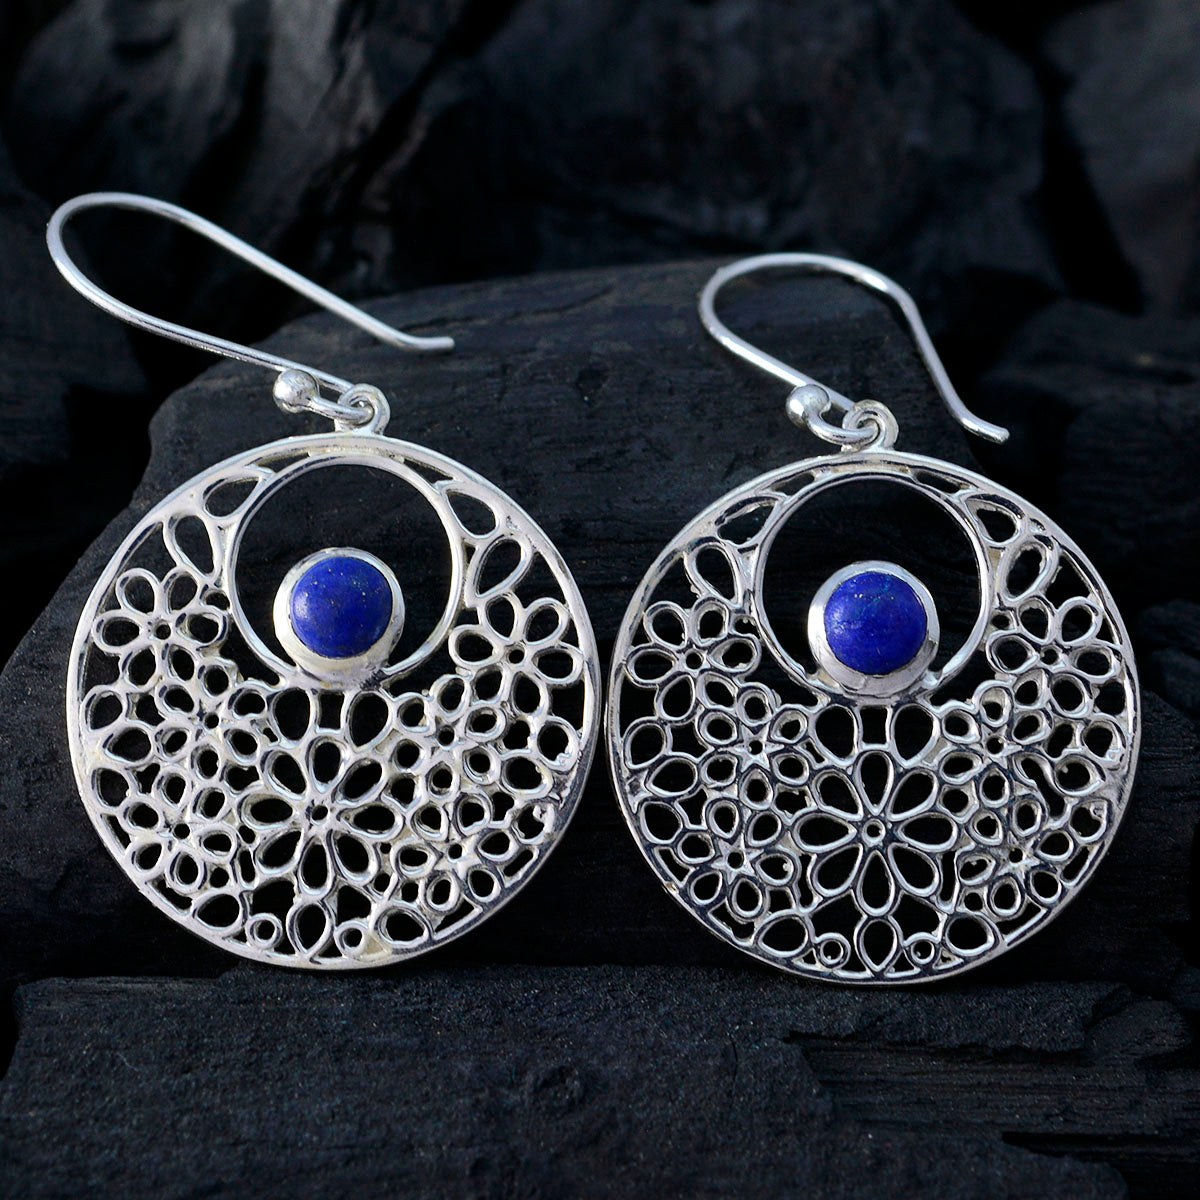 Riyo Genuine Gems round Cabochon Nevy Blue Lapis Lazuli Silver Earrings gift for mom